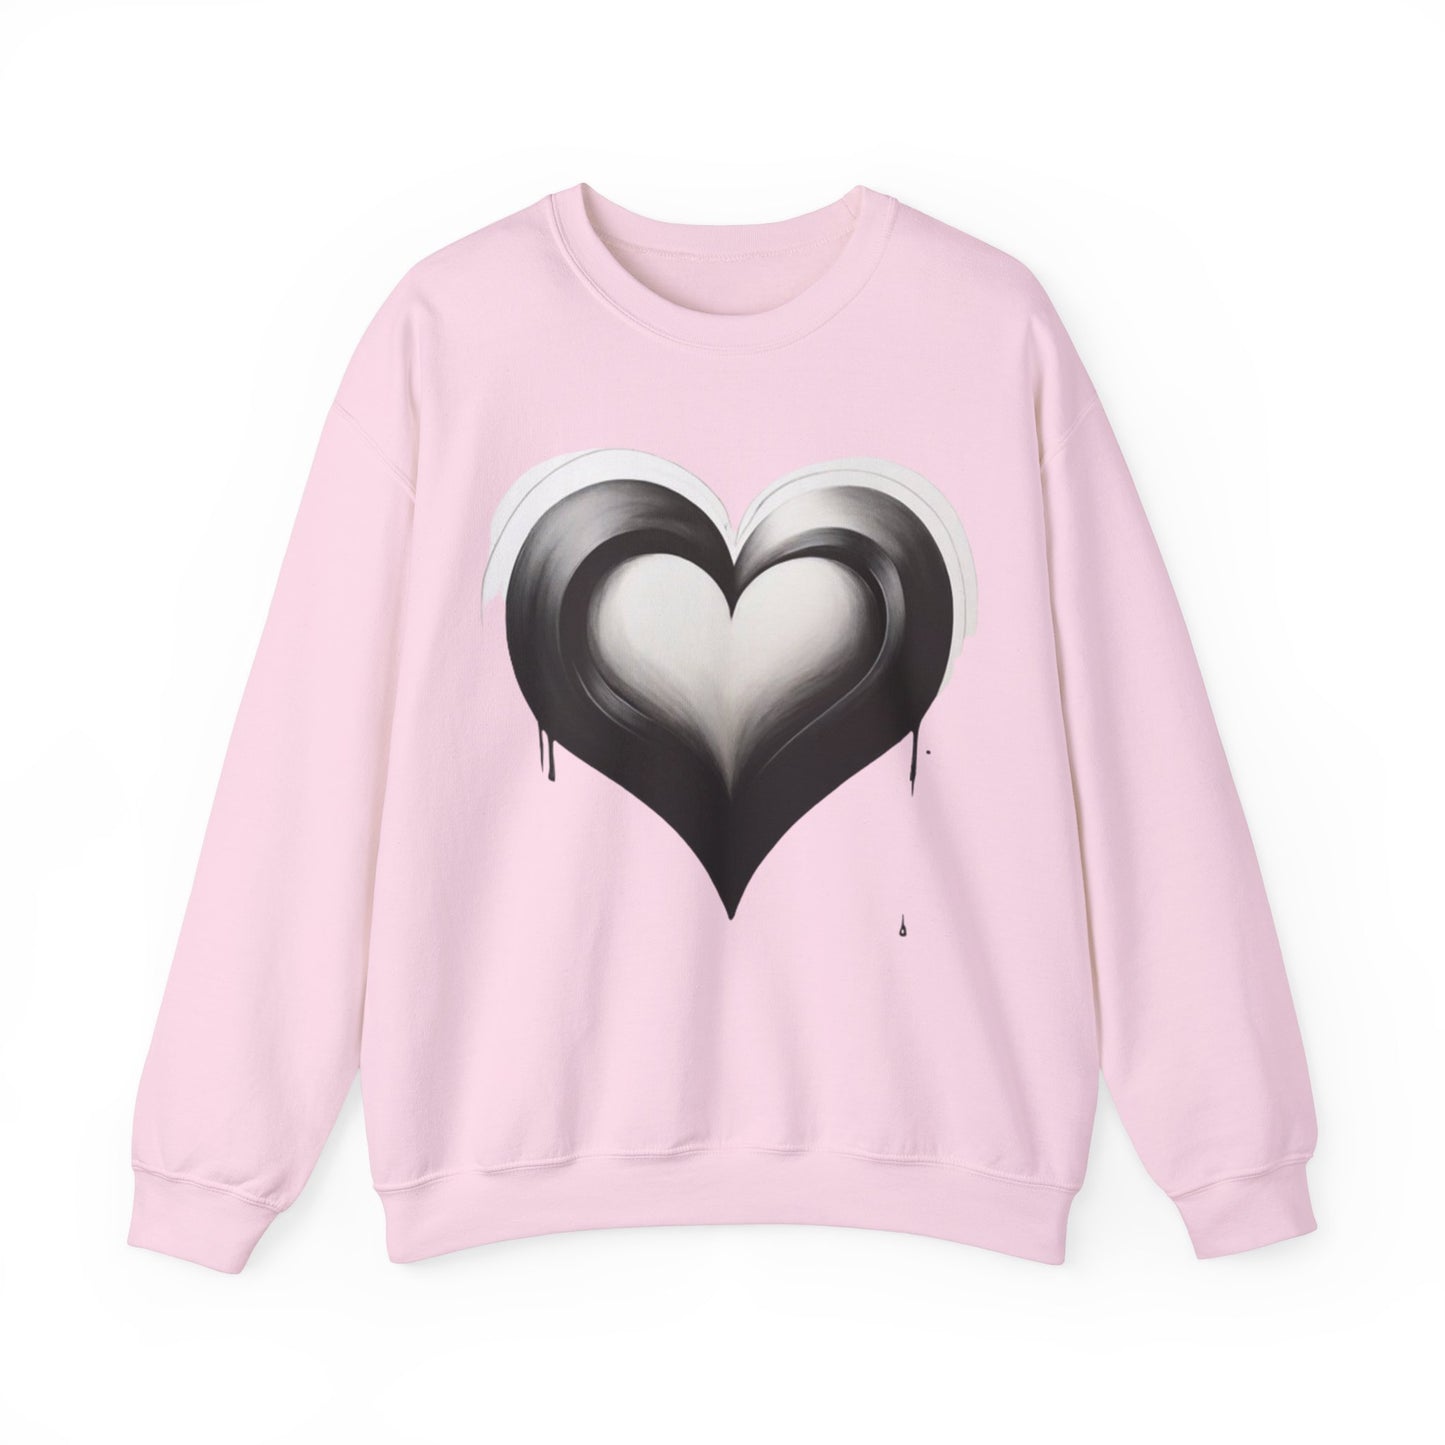 Black and White Love Heart - Unisex Crewneck Sweatshirt